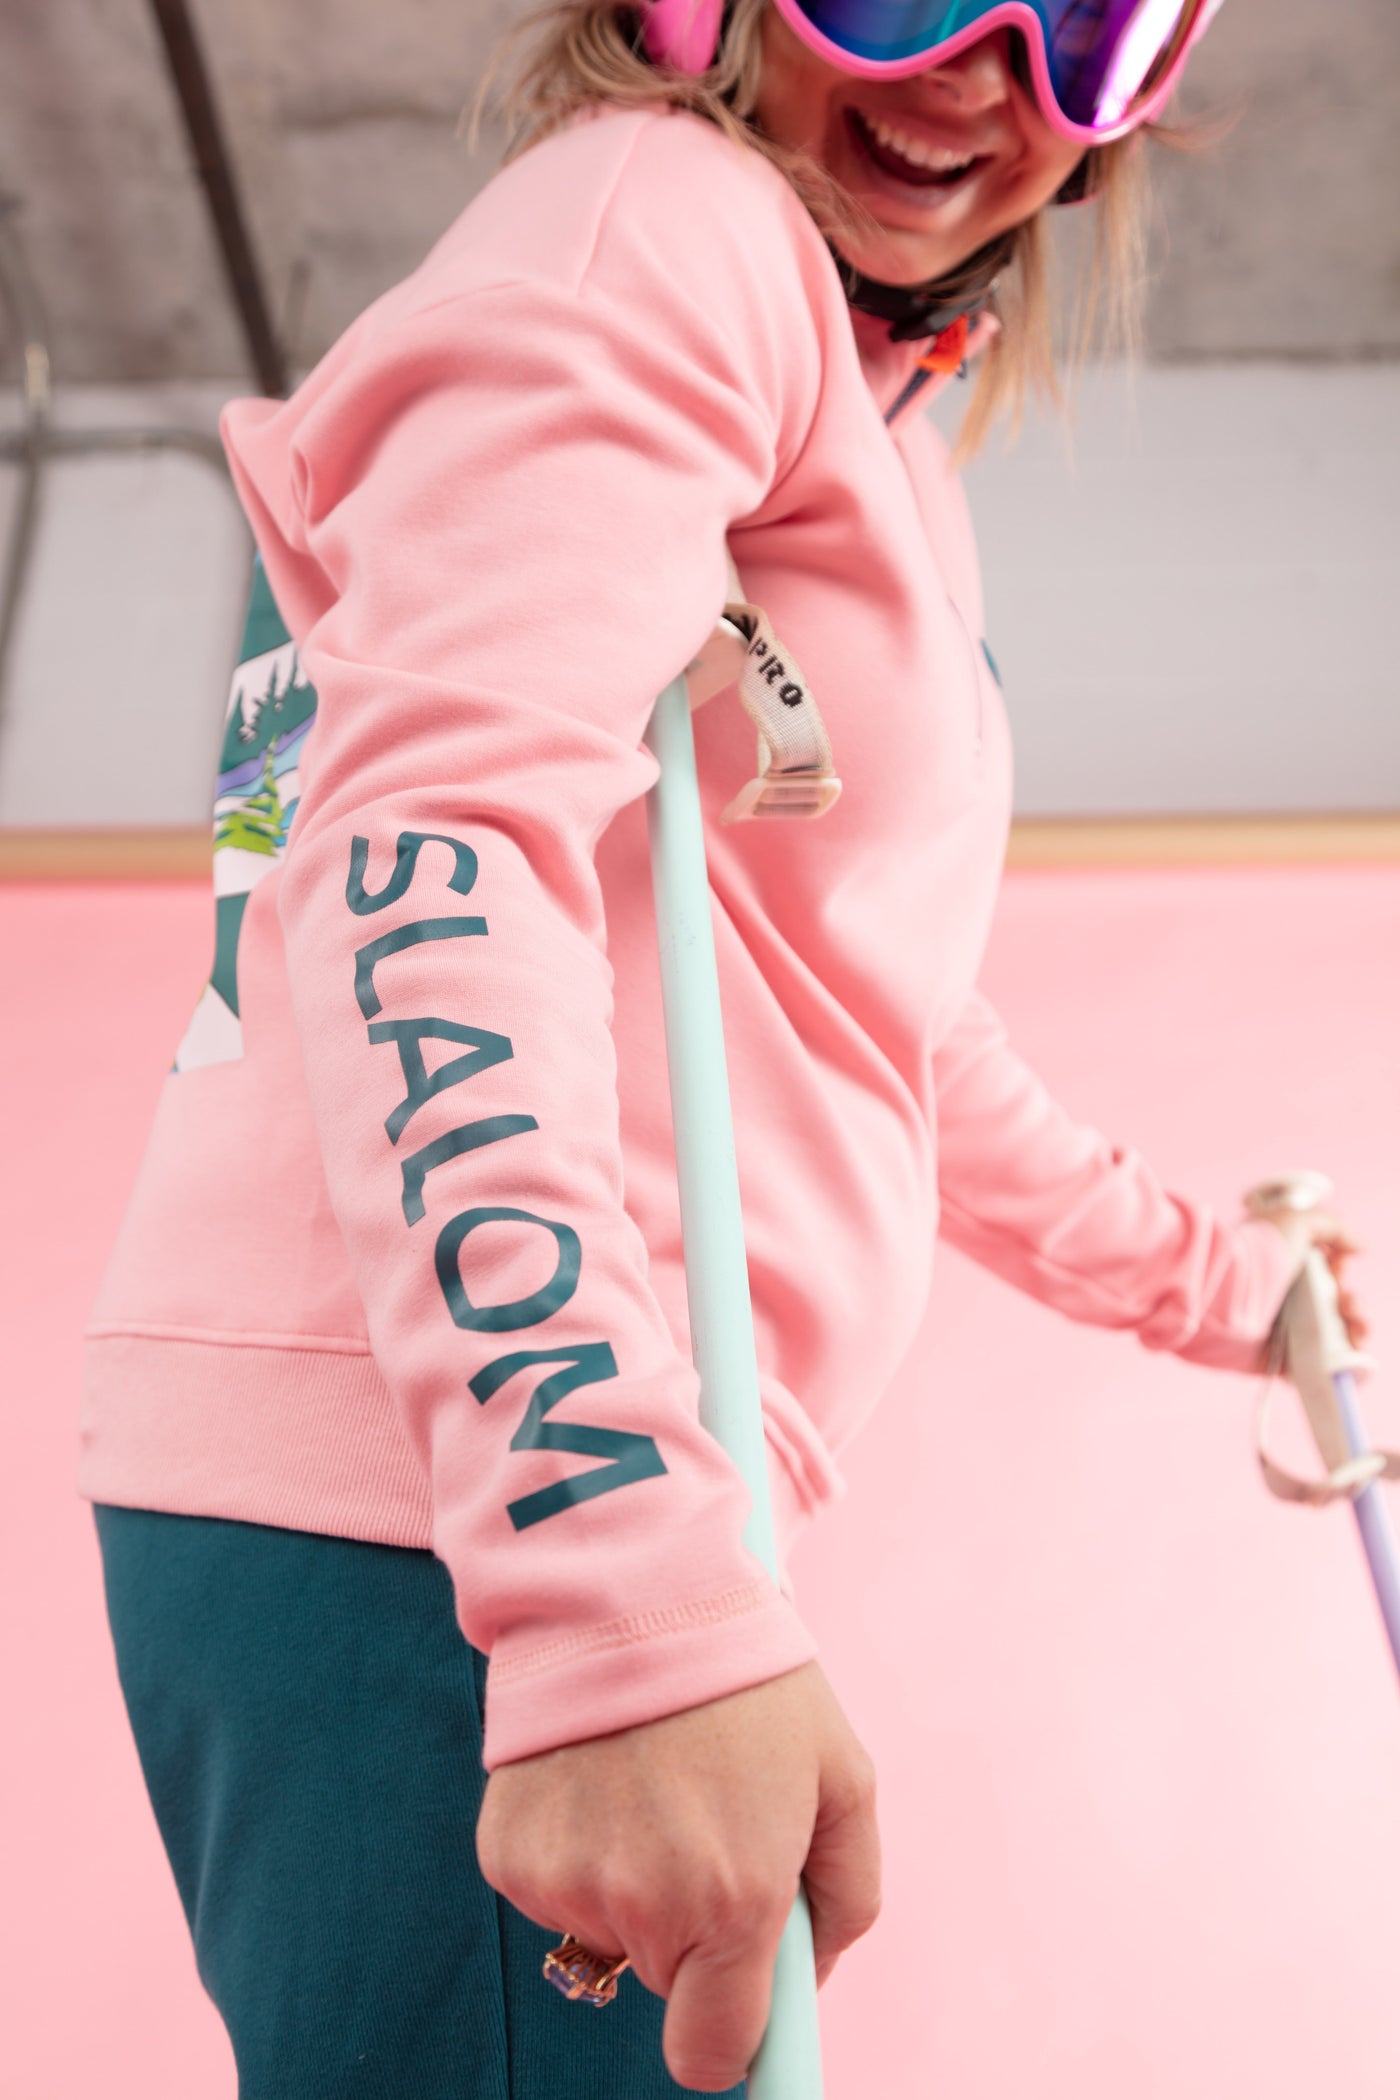 BIRDZ Slalom Zipper Sweat |Pink| Women